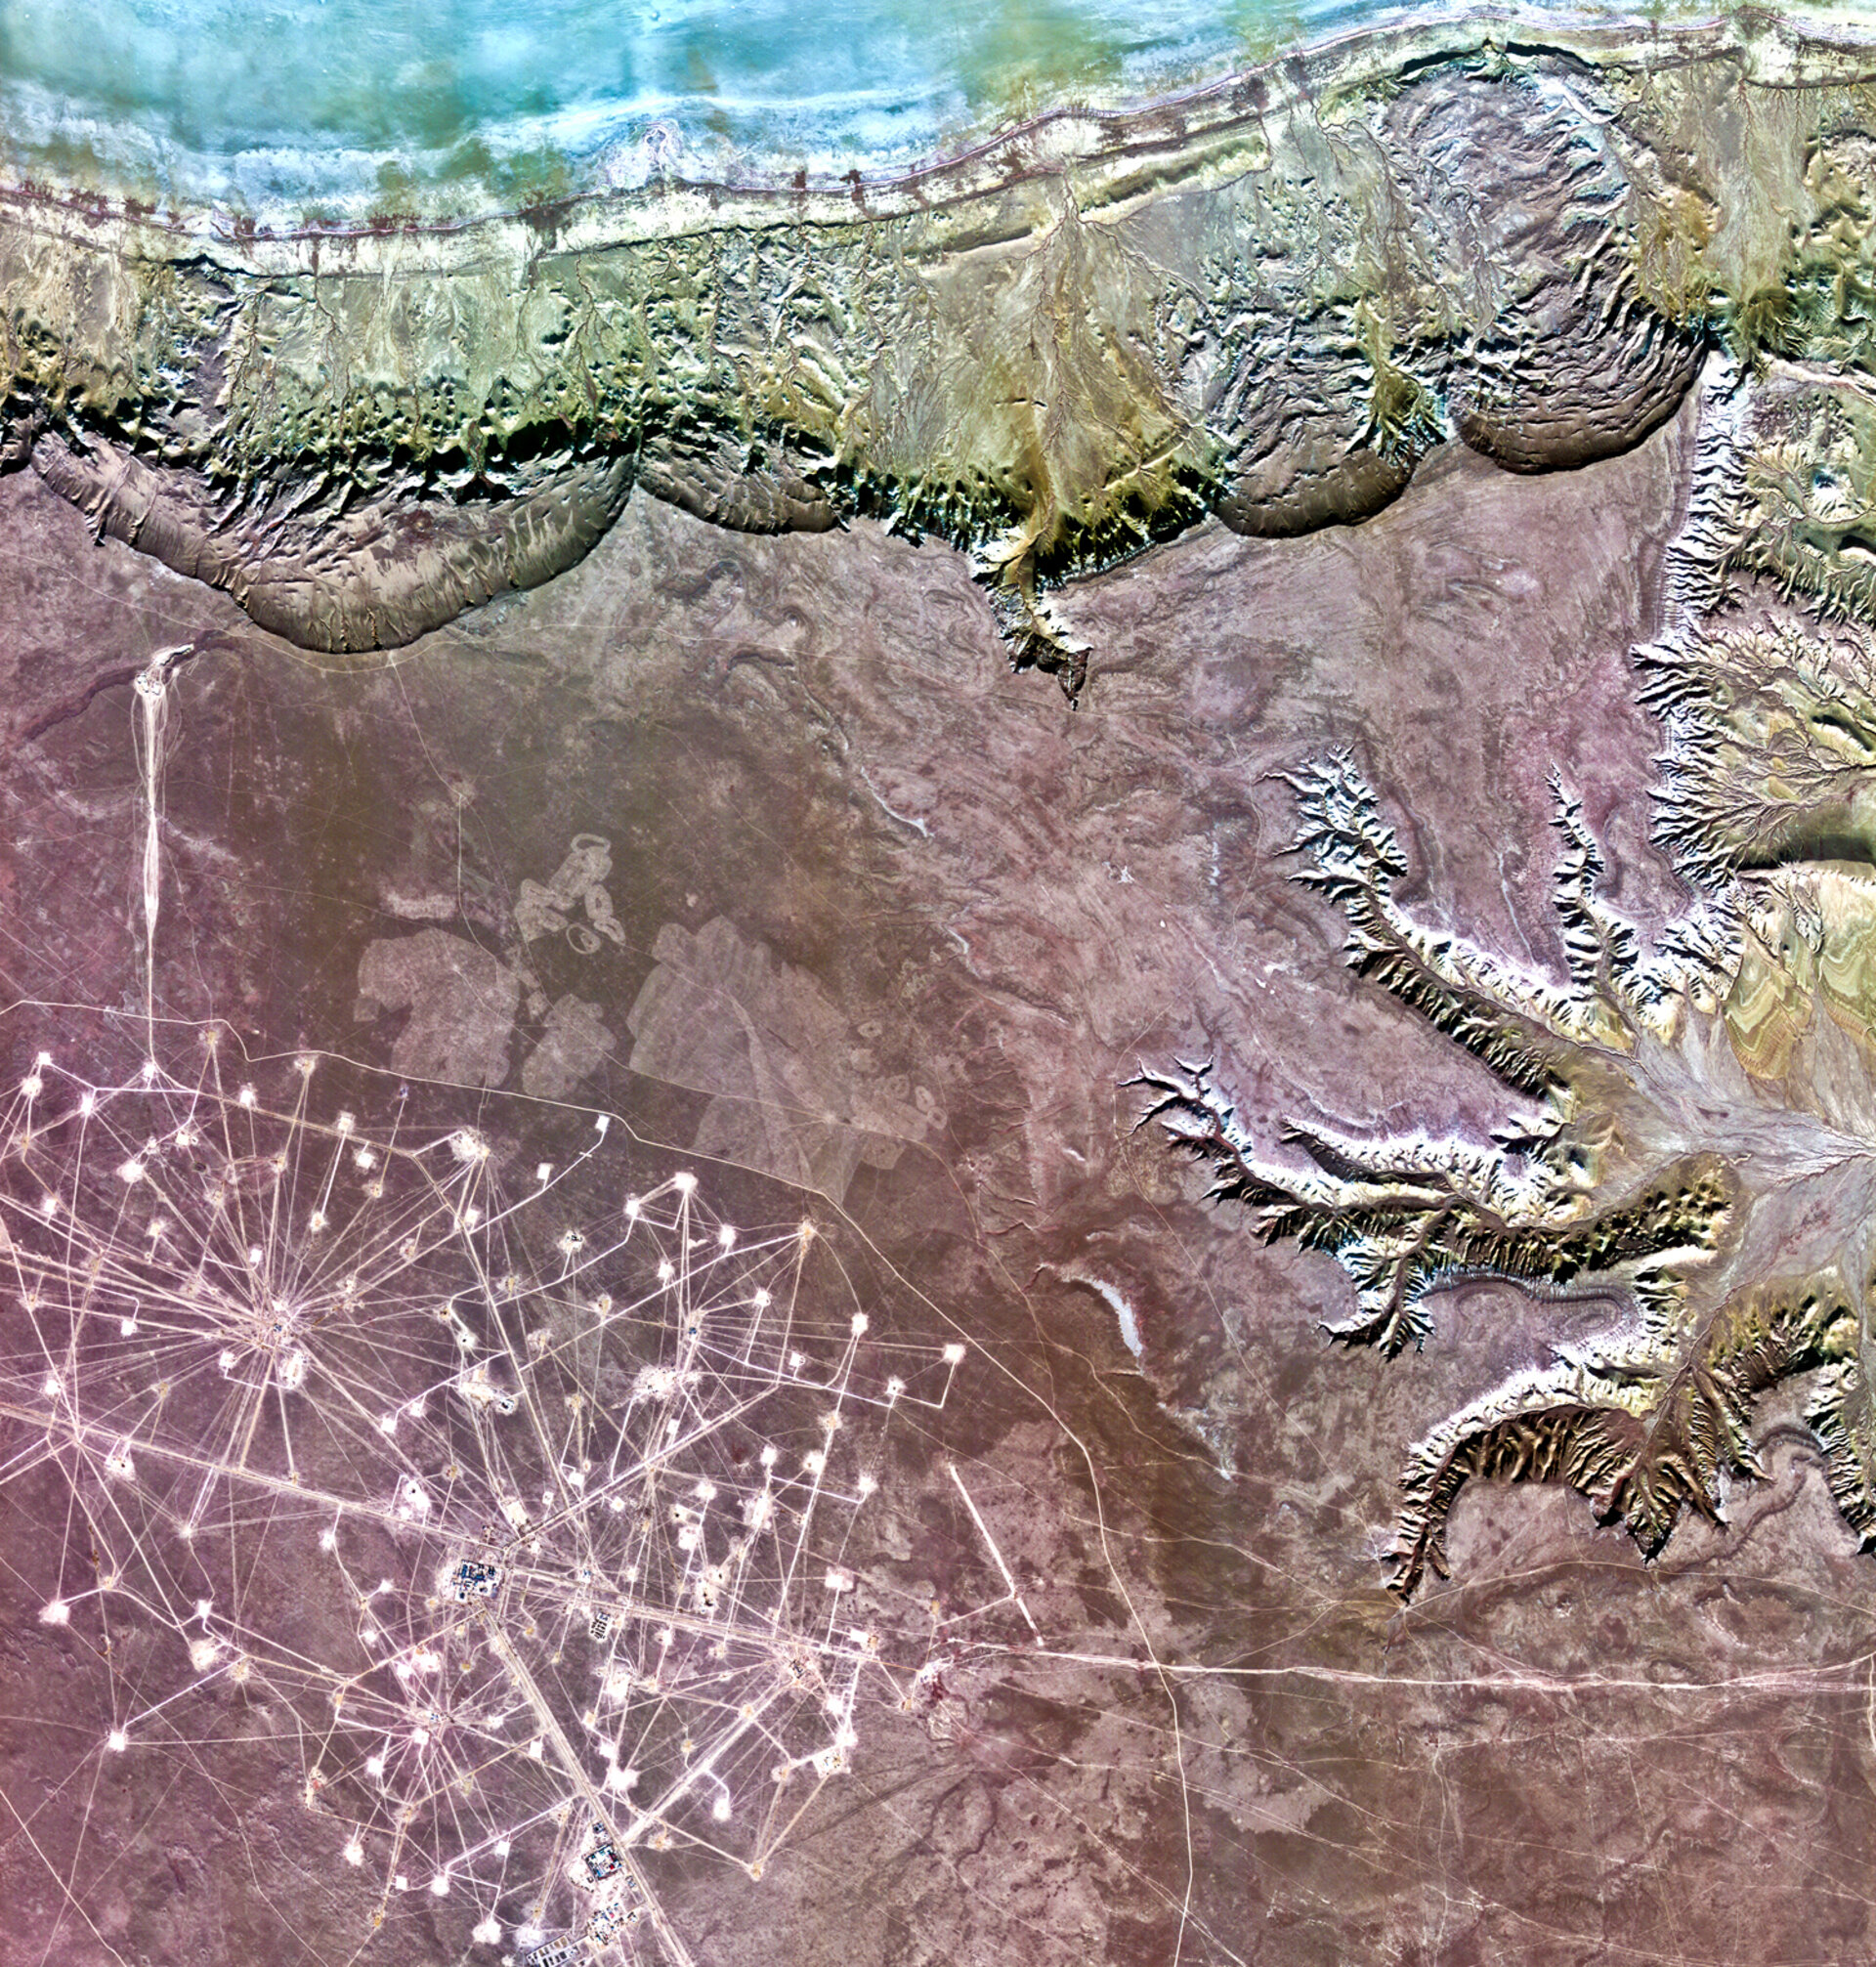 La regione di Mangistau, Kazakistan, vista dal satellite Kompsat-2